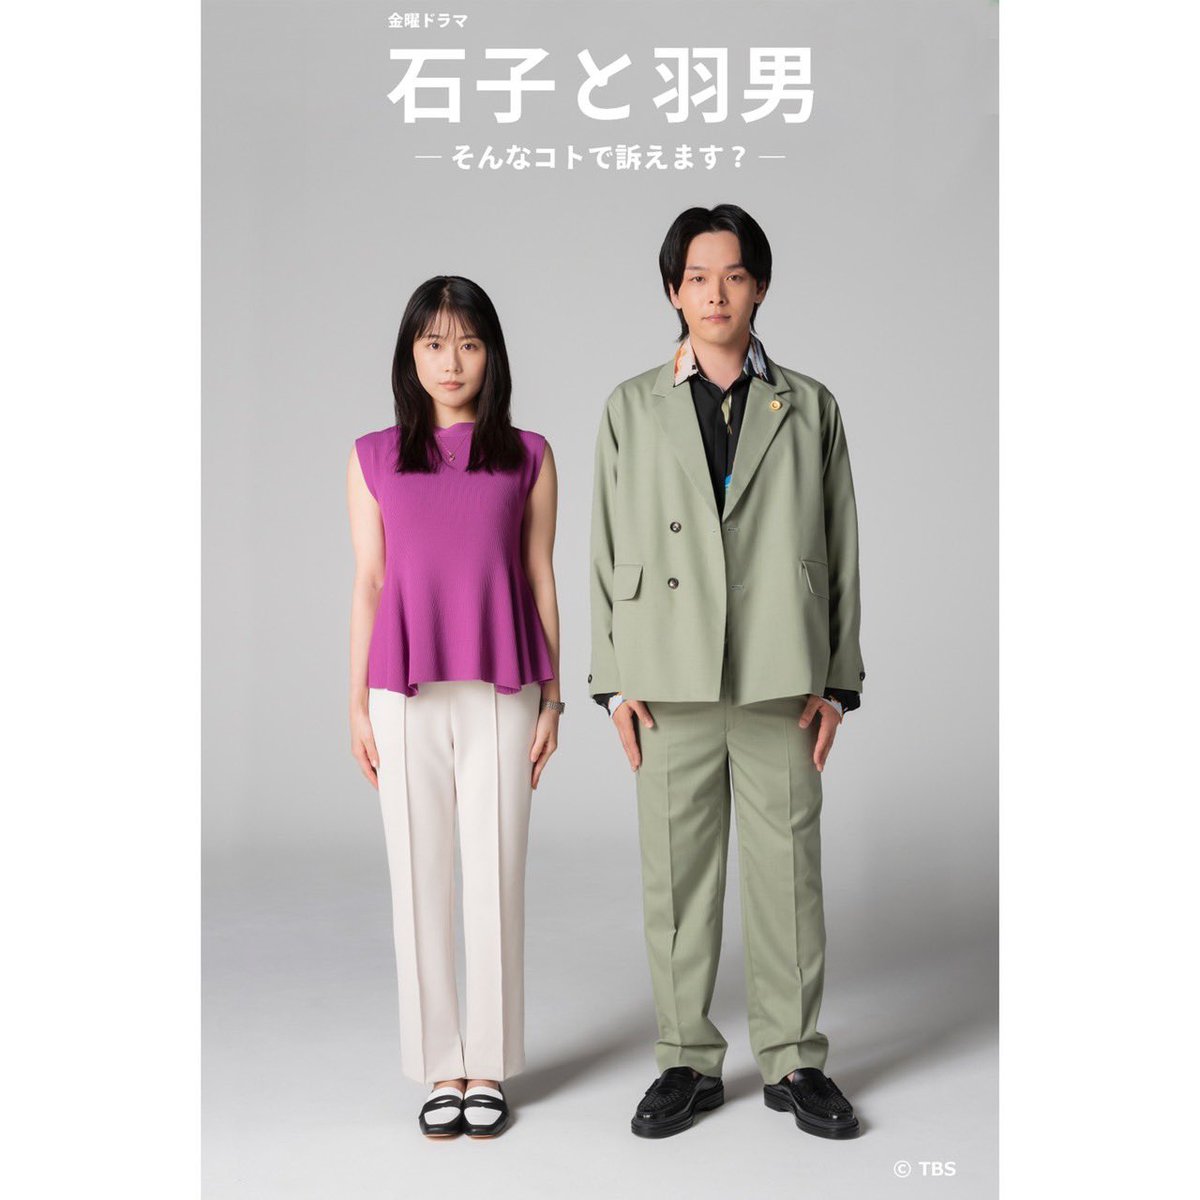 TBS「石子と羽男ーそんなコトで訴えます？ー」【公式】DVD&Blu-ray2月 